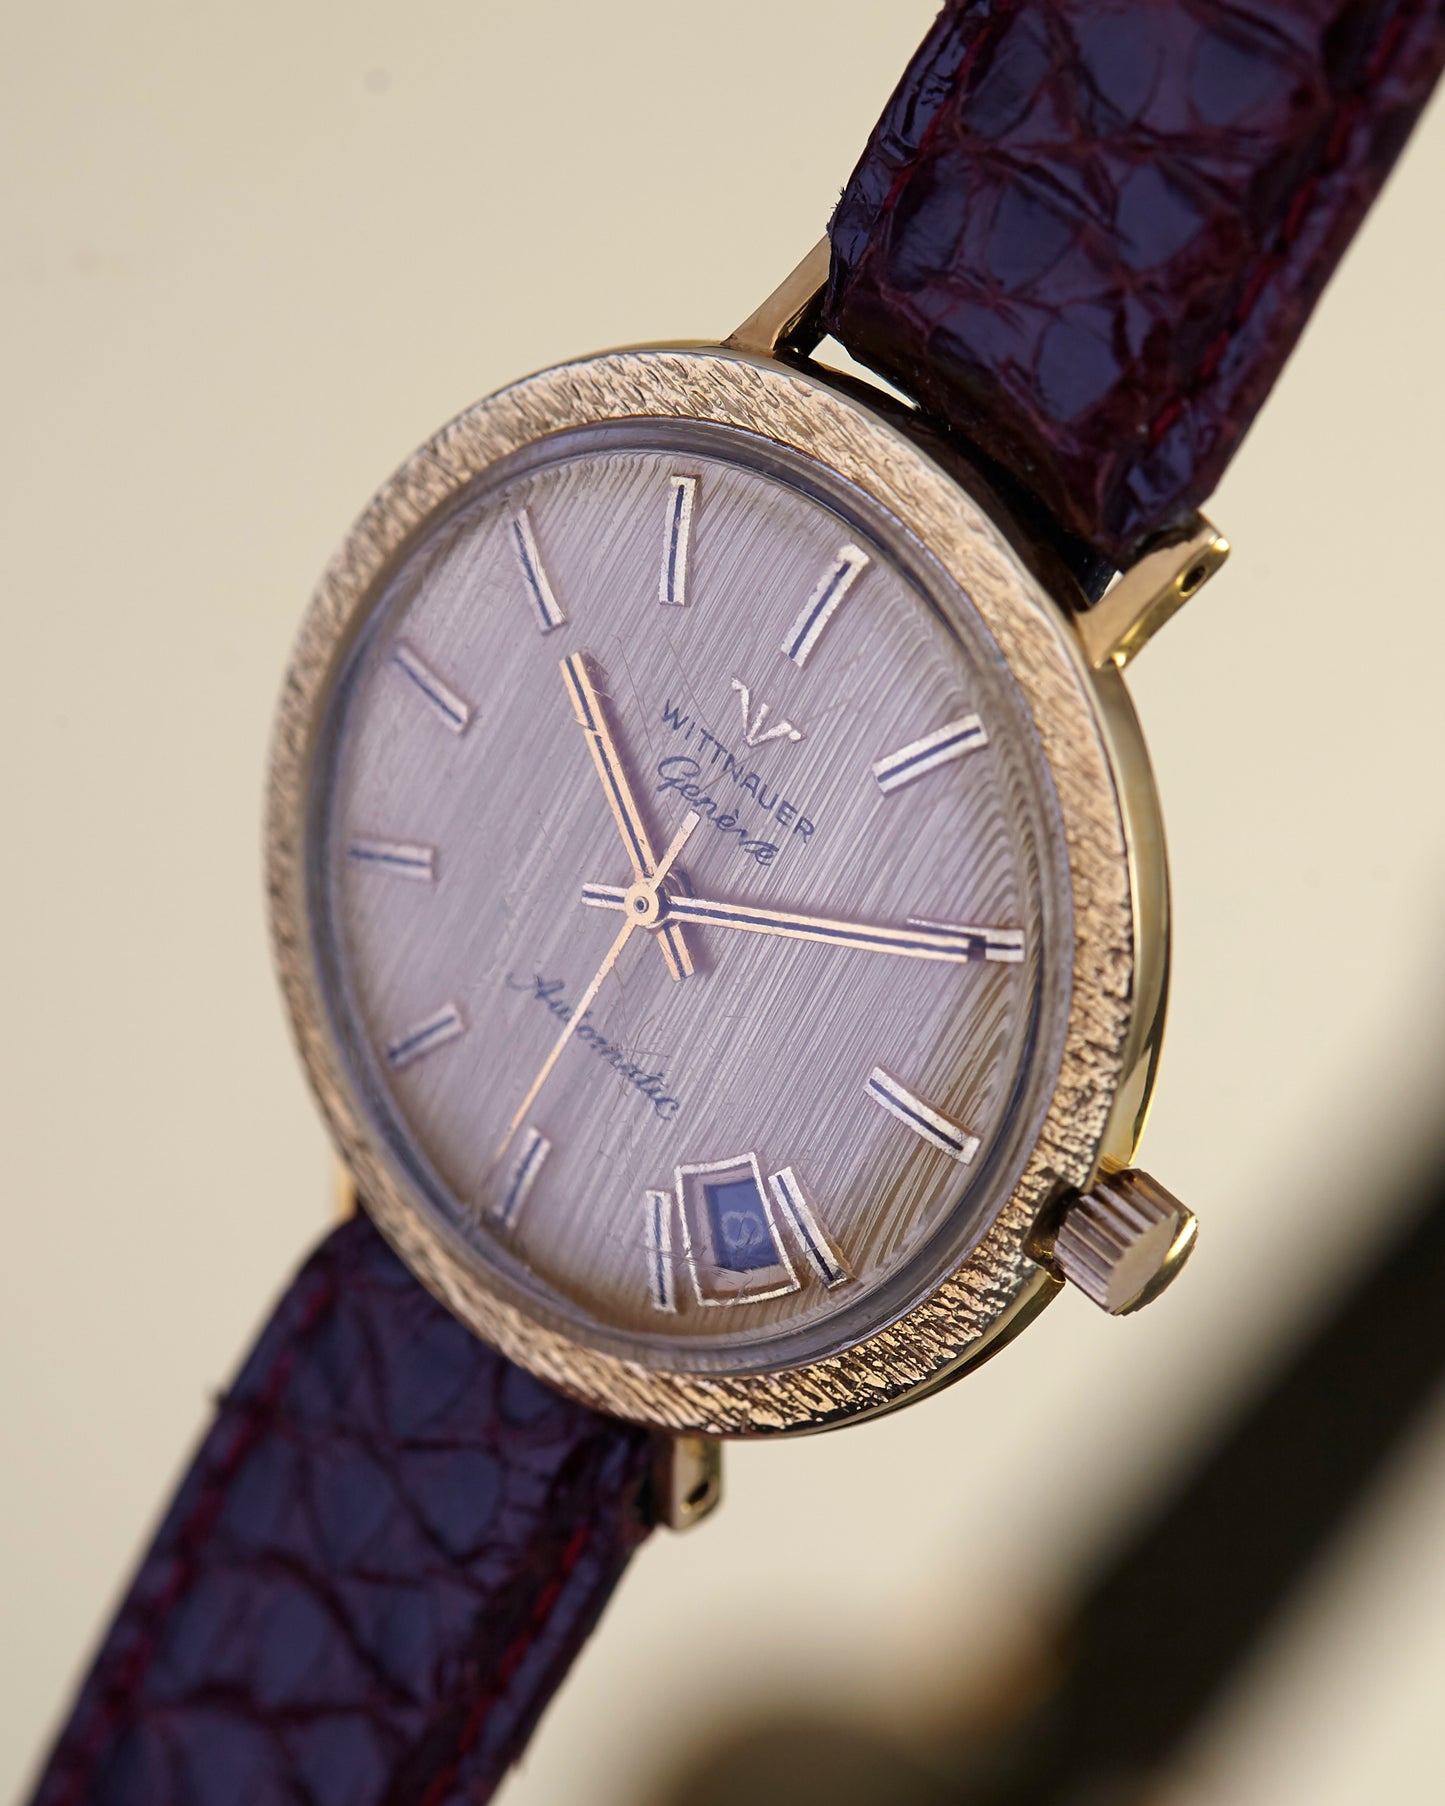 Wittnauer Retro Automatic Date Vintage Wristwatch